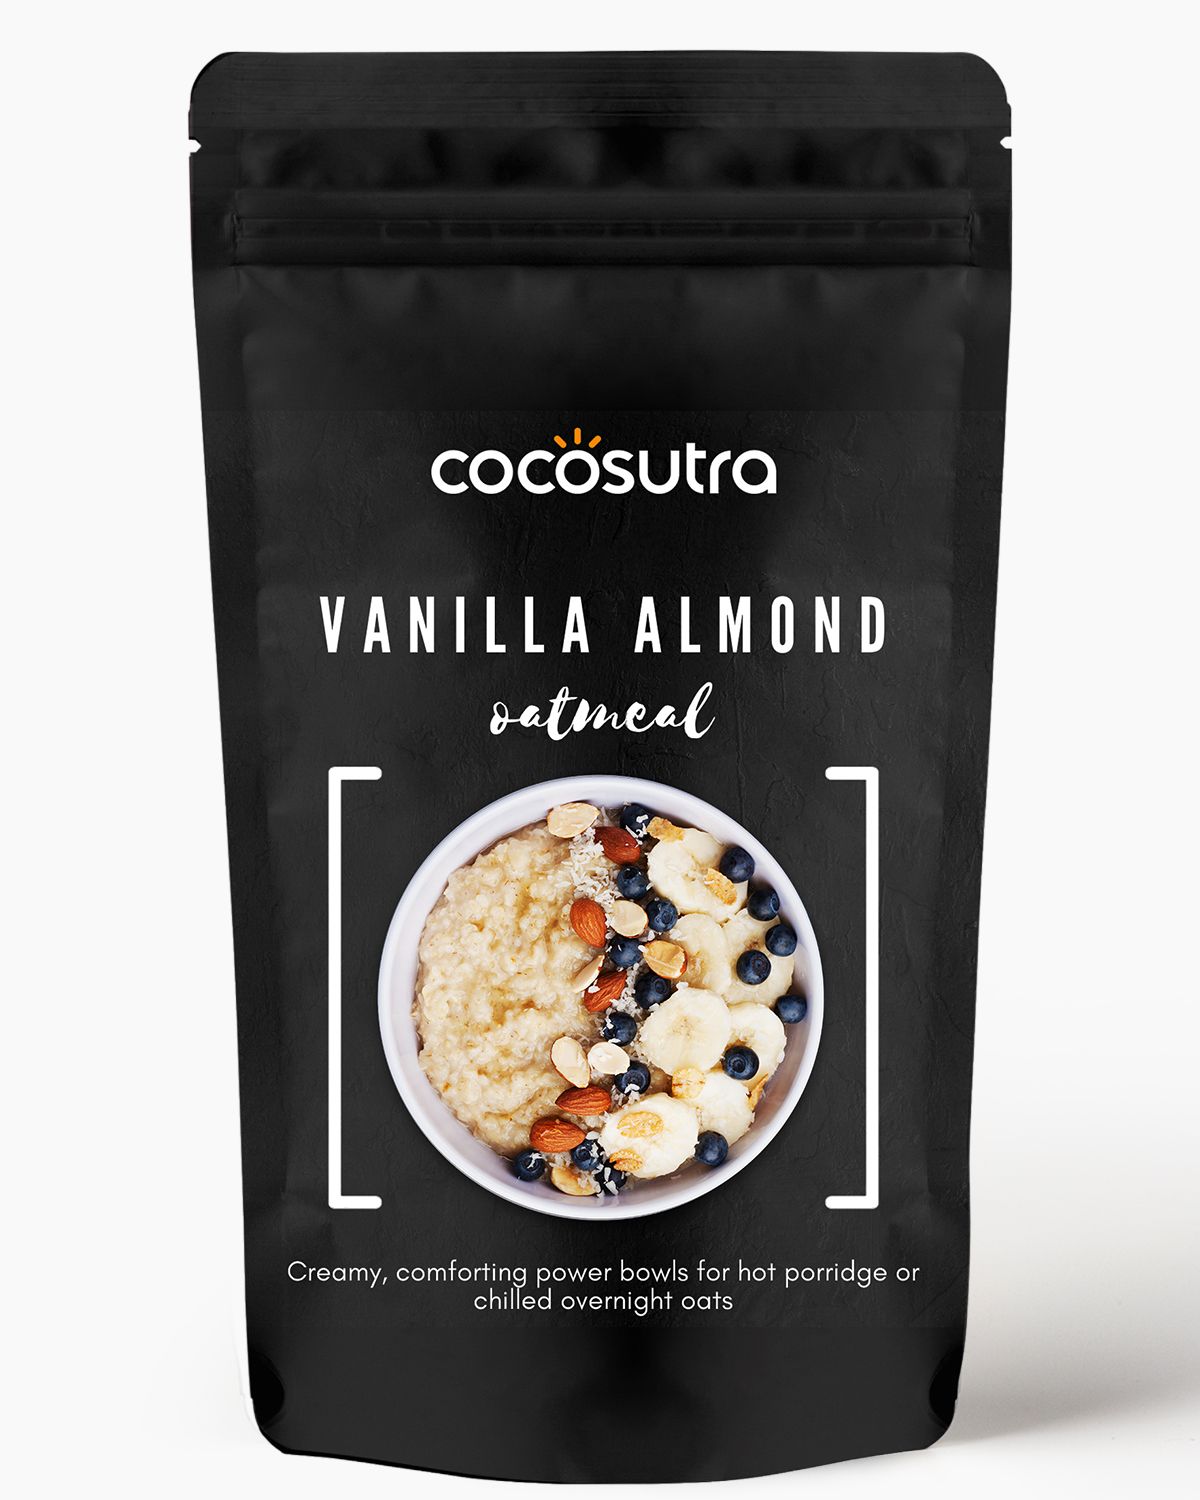 Cocosutra Vanilla Almond Oatmeal Image